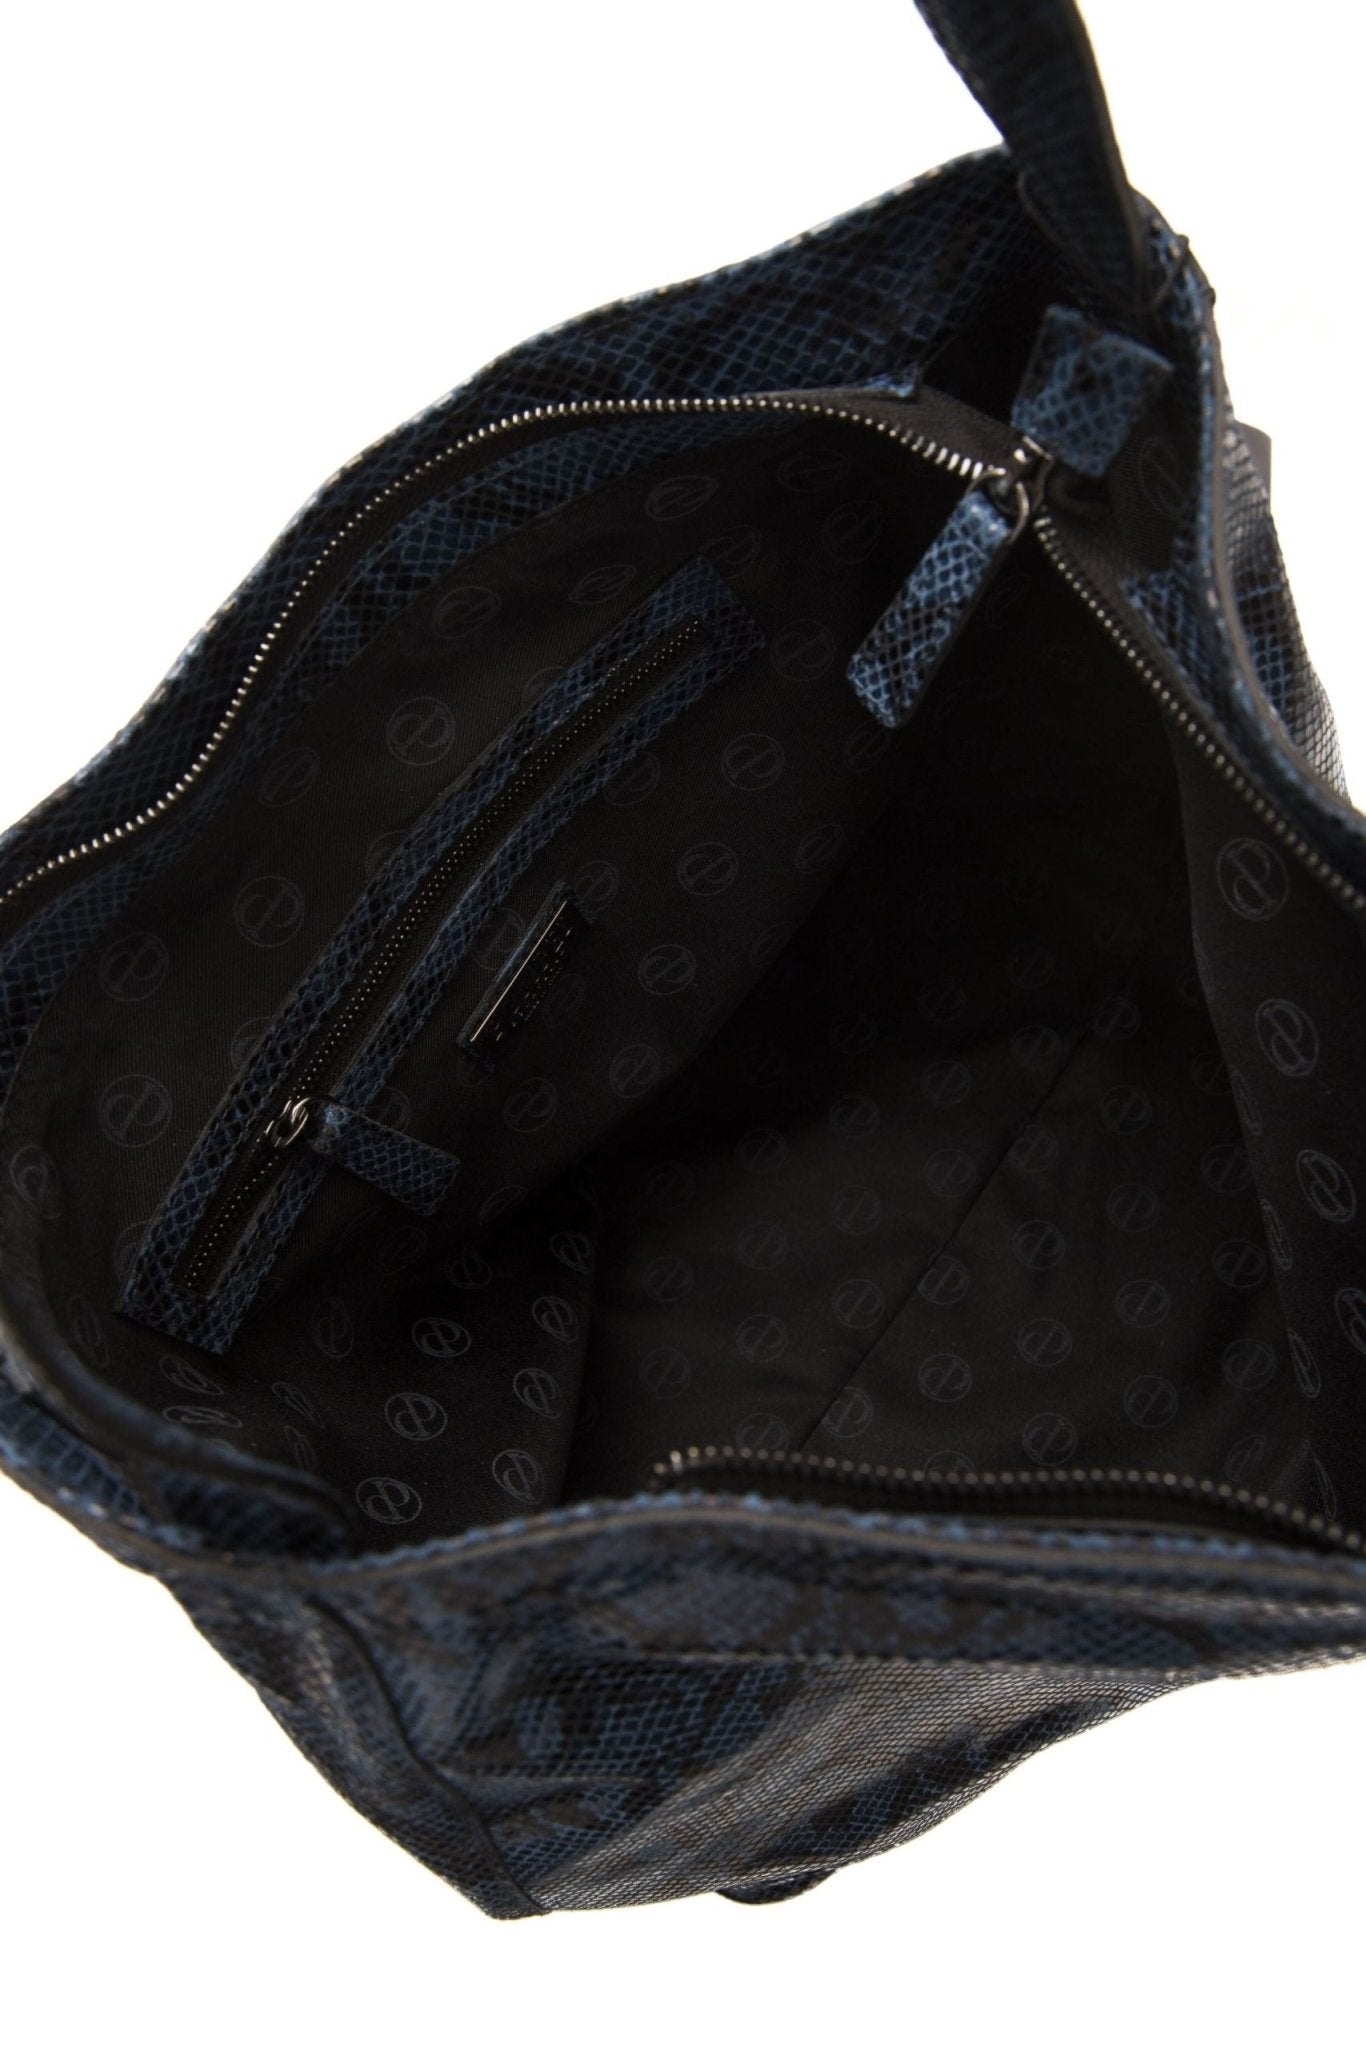 Pompei Donatella Blue Leather Shoulder Bag - Fizigo